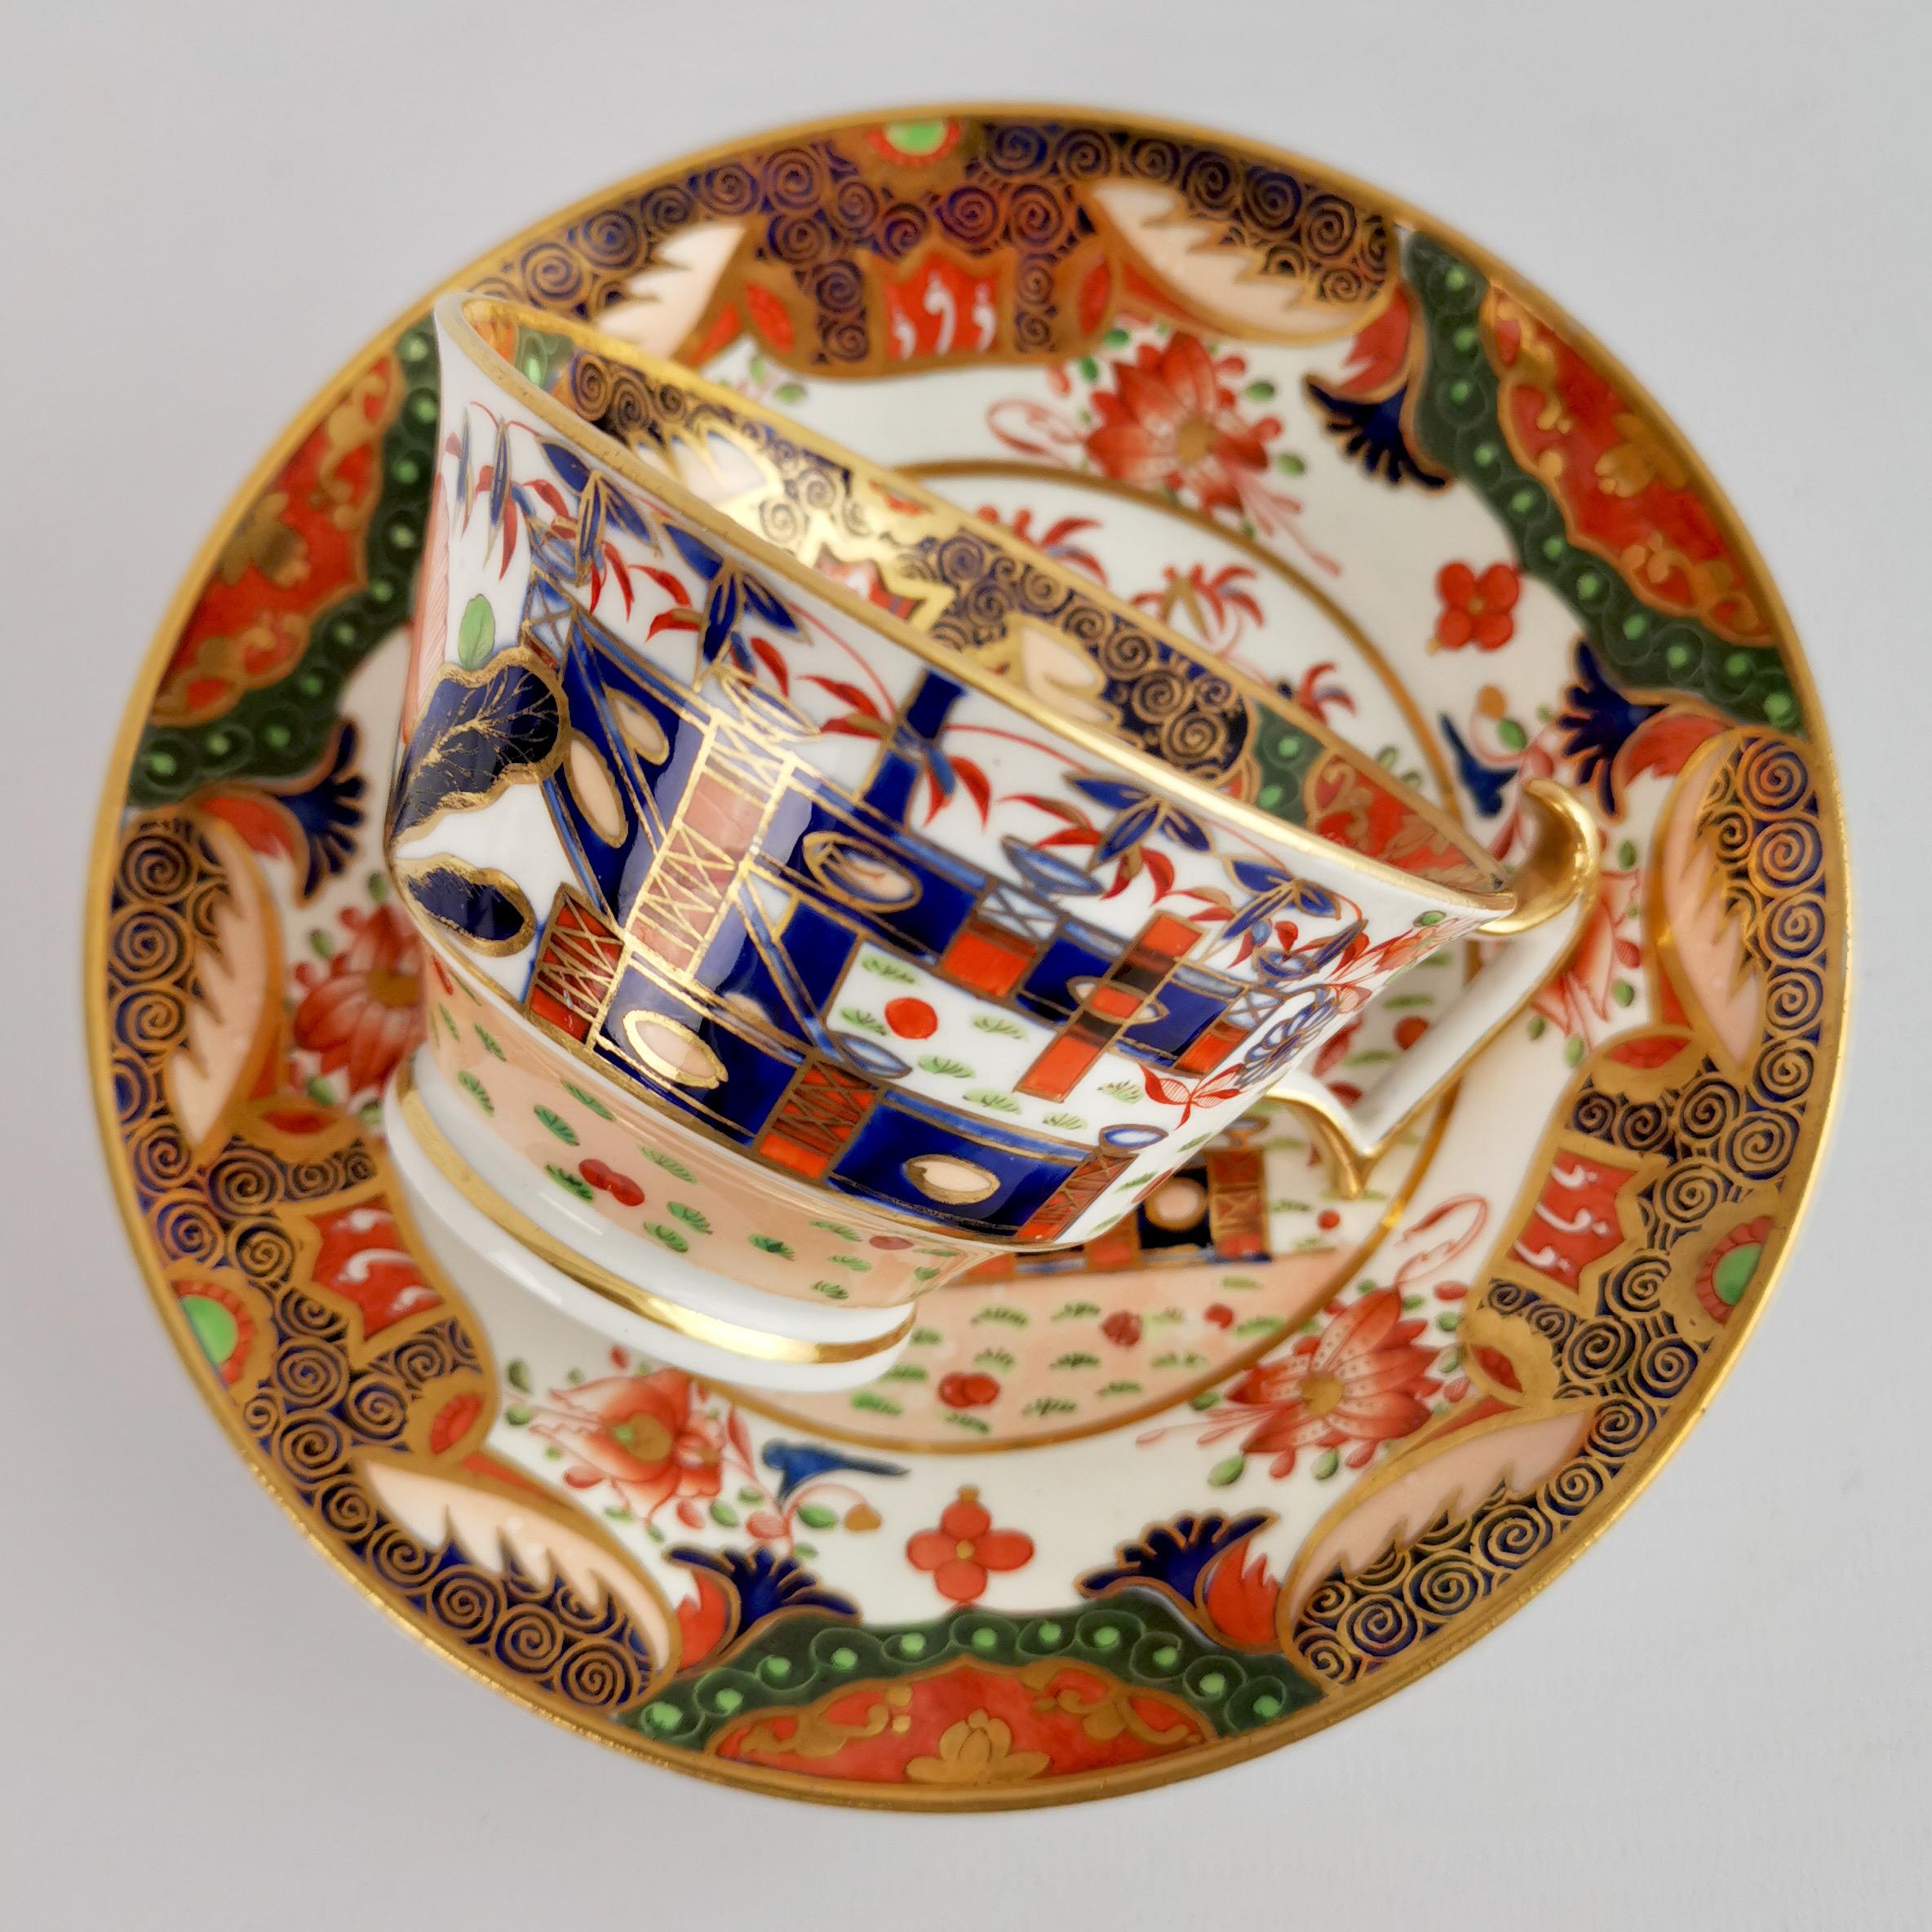 Early 19th Century Porcelain Teacup Trio, Spode Imari Tobacco Leaf Patt. 967, Regency ca 1815